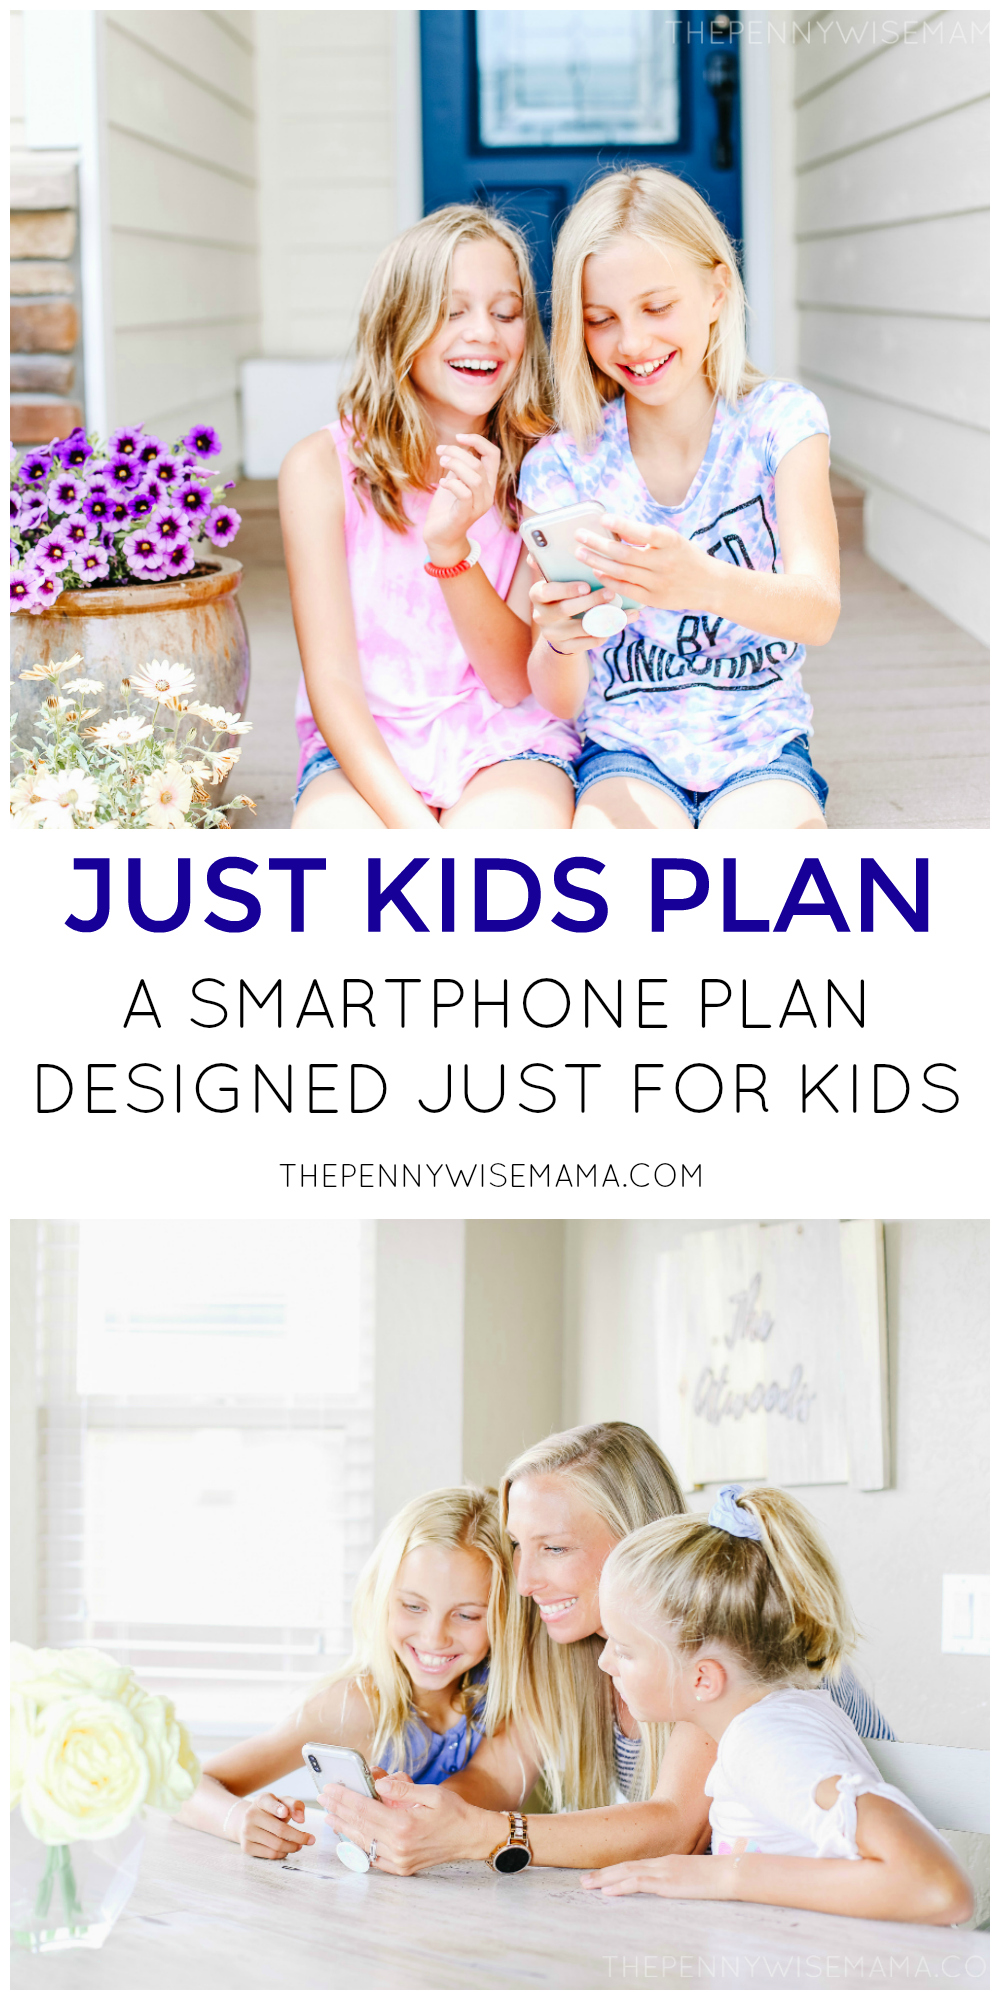 Just Kids Plan - A Smartphone Plan Designed Just for Kids! Click to learn more #Verizon #JustKidsPlan 